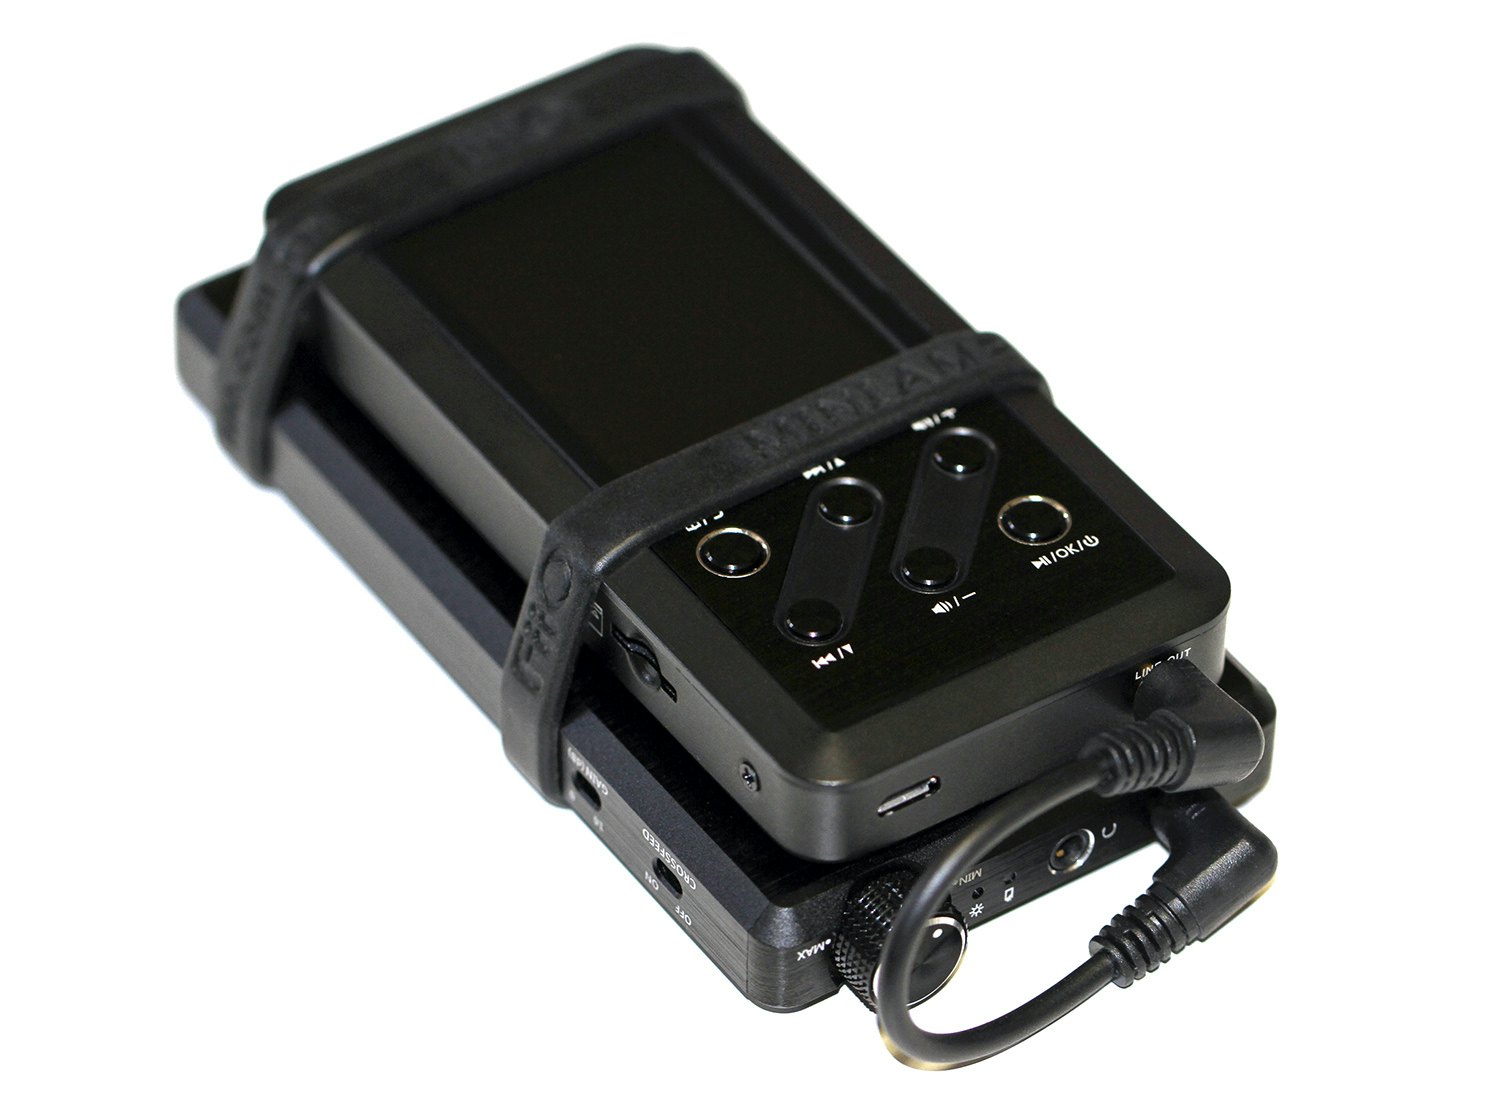 Fiio E12 Portable Headphone Amplifier